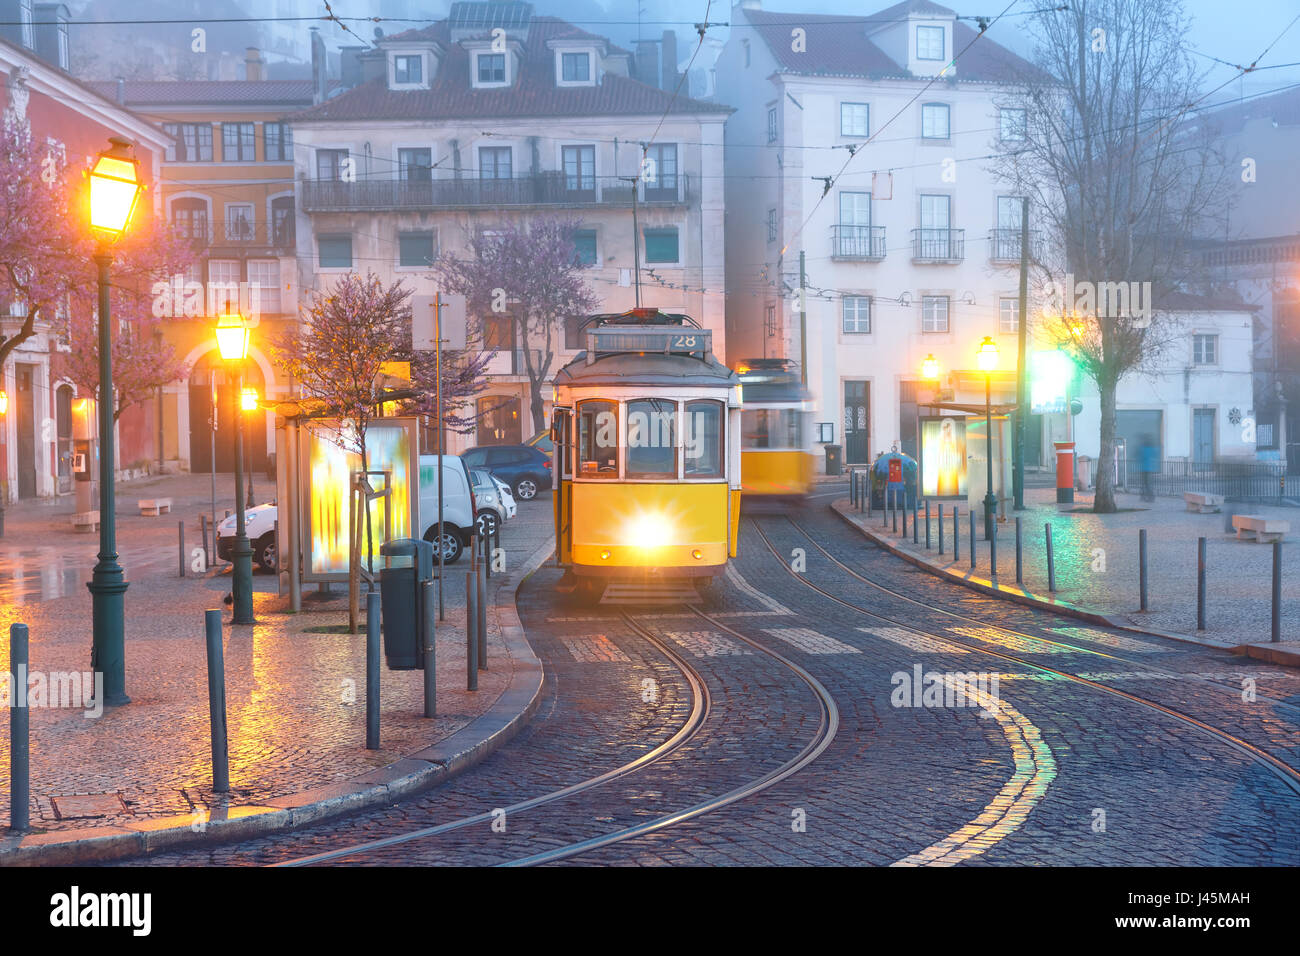 Gelbe Straßenbahnlinie 28 in Alfama, Lissabon, Portugal Stockfoto